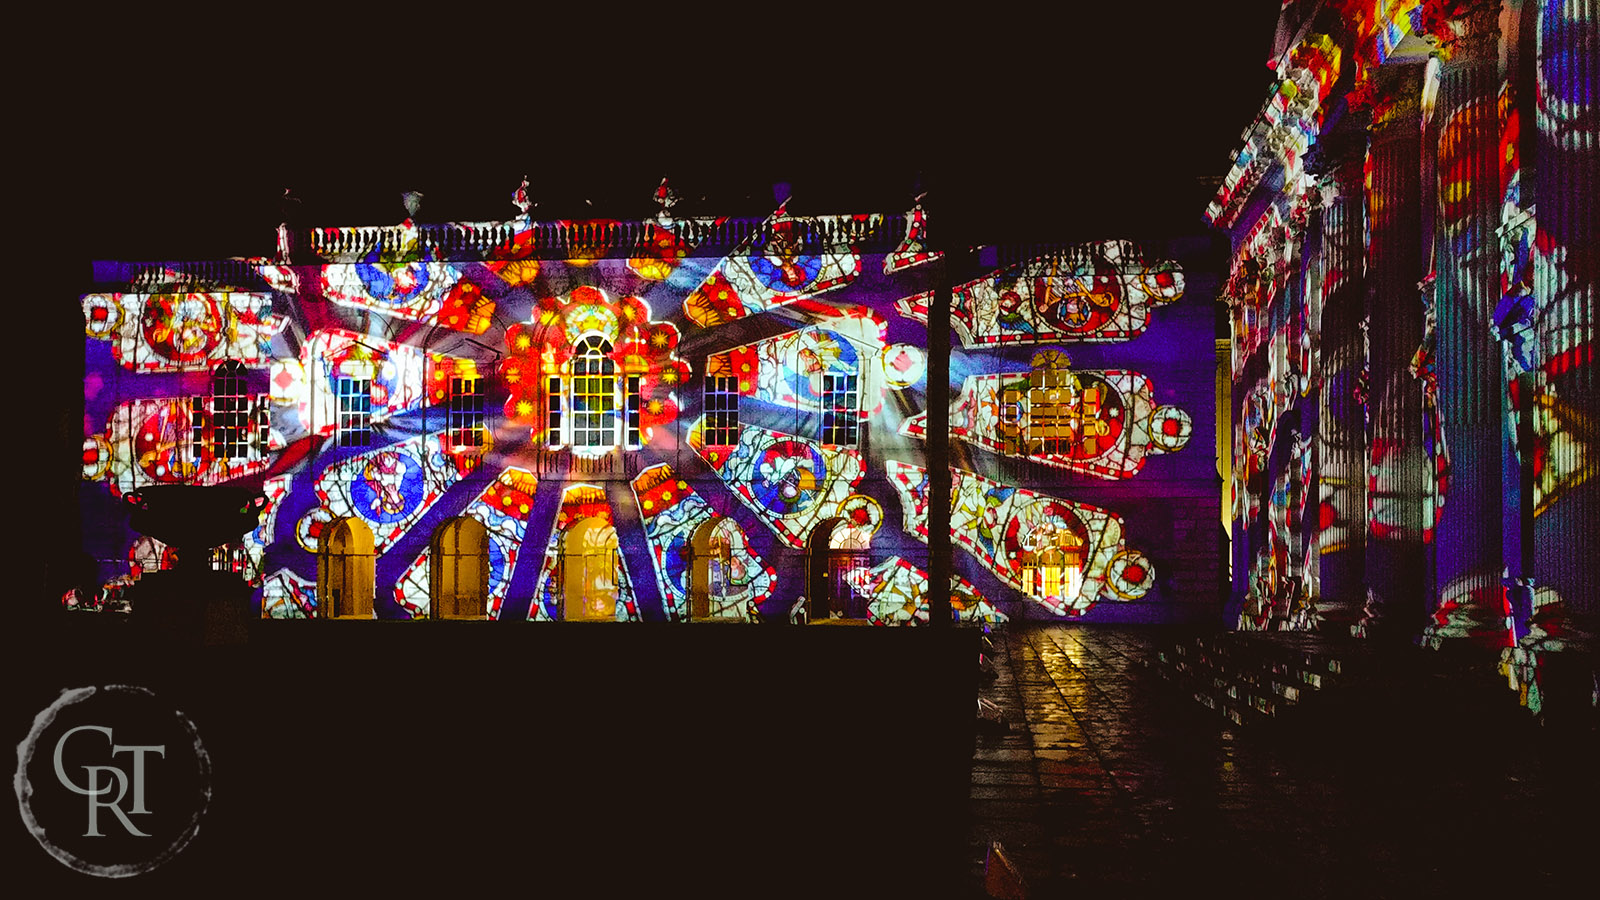 Senate House, Cambridge lit up as part of the 2017 E-luminate festival